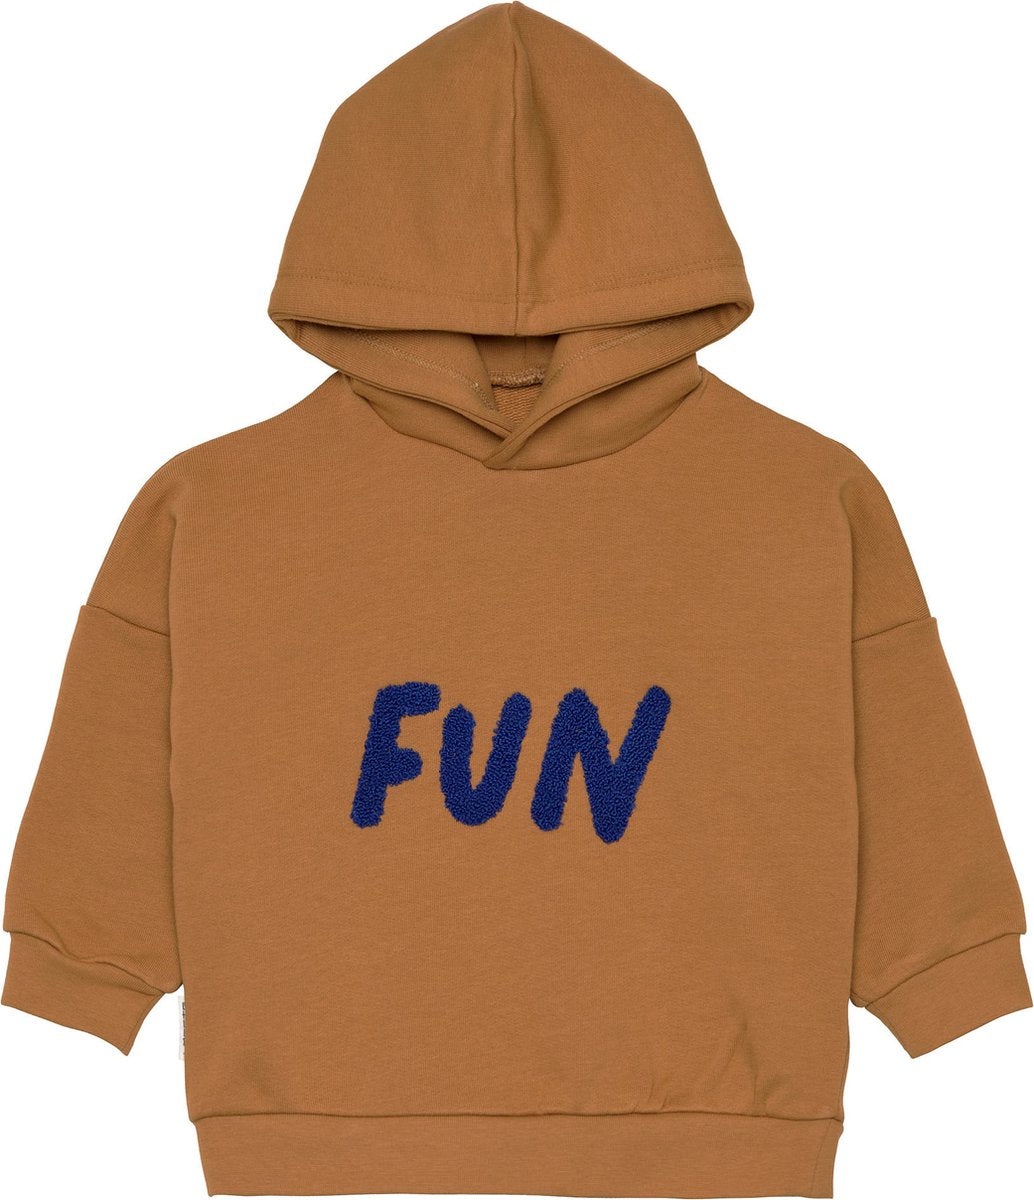 Lassig Kids sweater Fun brown